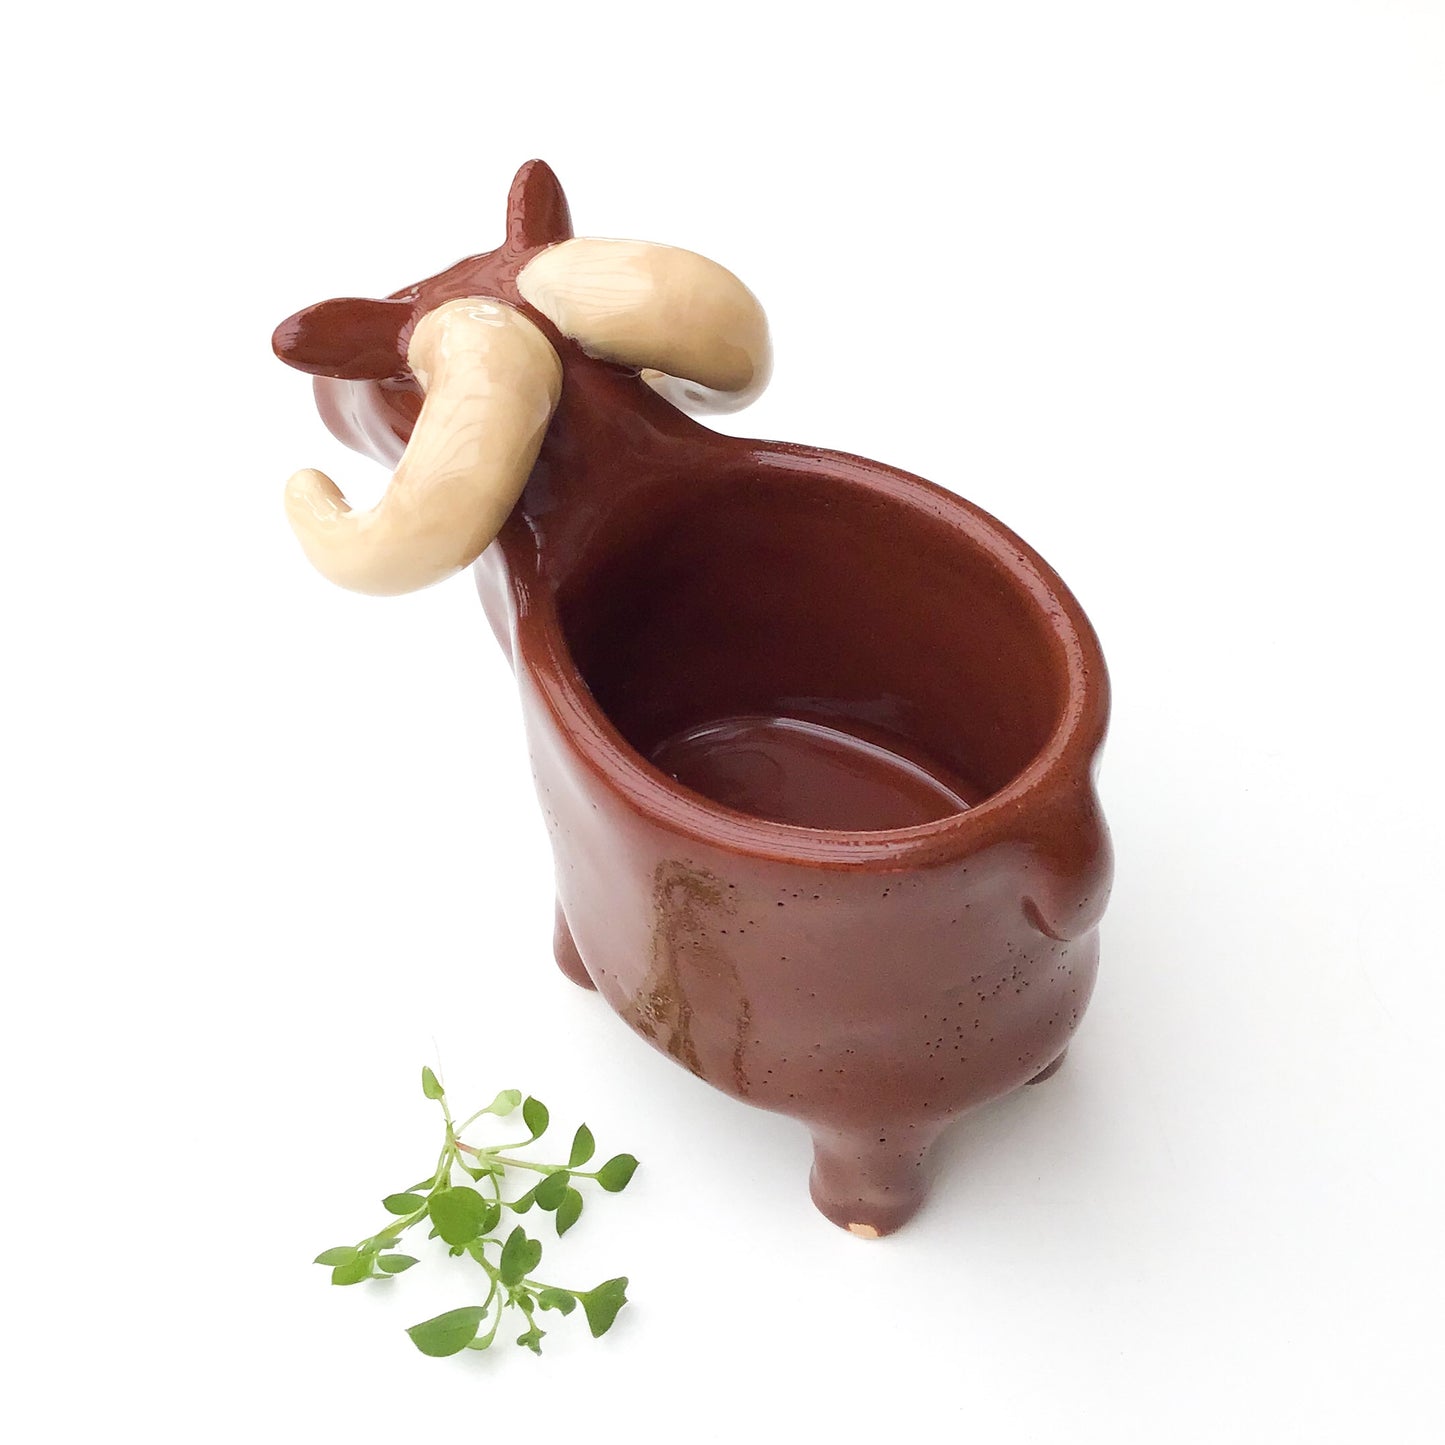 Brown Sheep Pot - Ceramic Sheep Planter